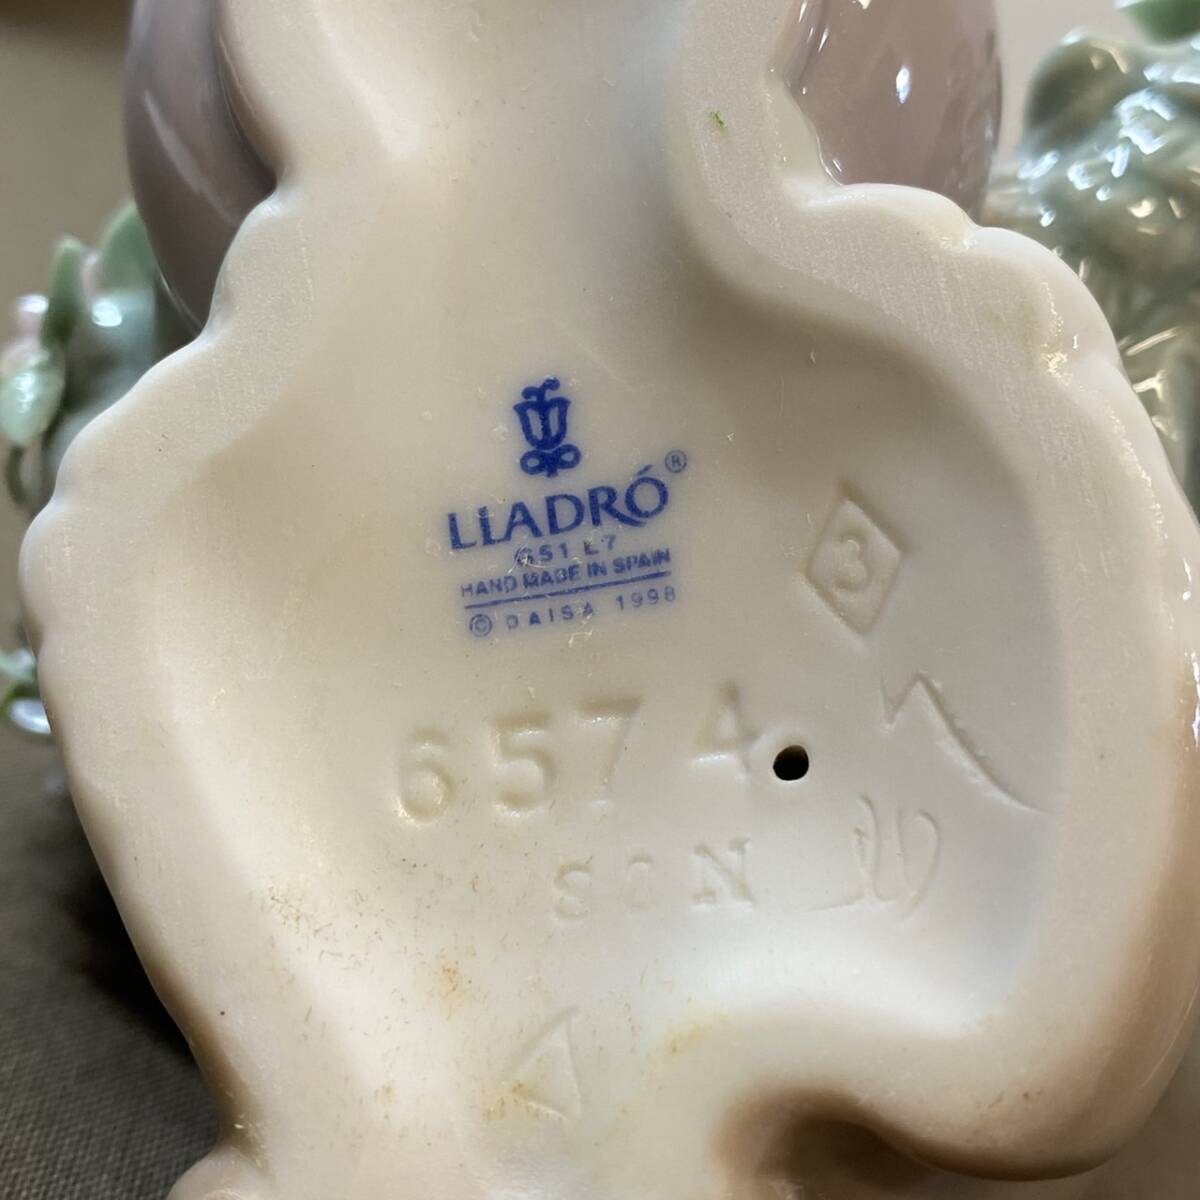 【MH-7239】中古品 LLADRO リヤドロ お花が大好き 6574 犬 陶器 フィギュリン 西洋陶器 人形 西洋磁器 置物 インテリア_画像6